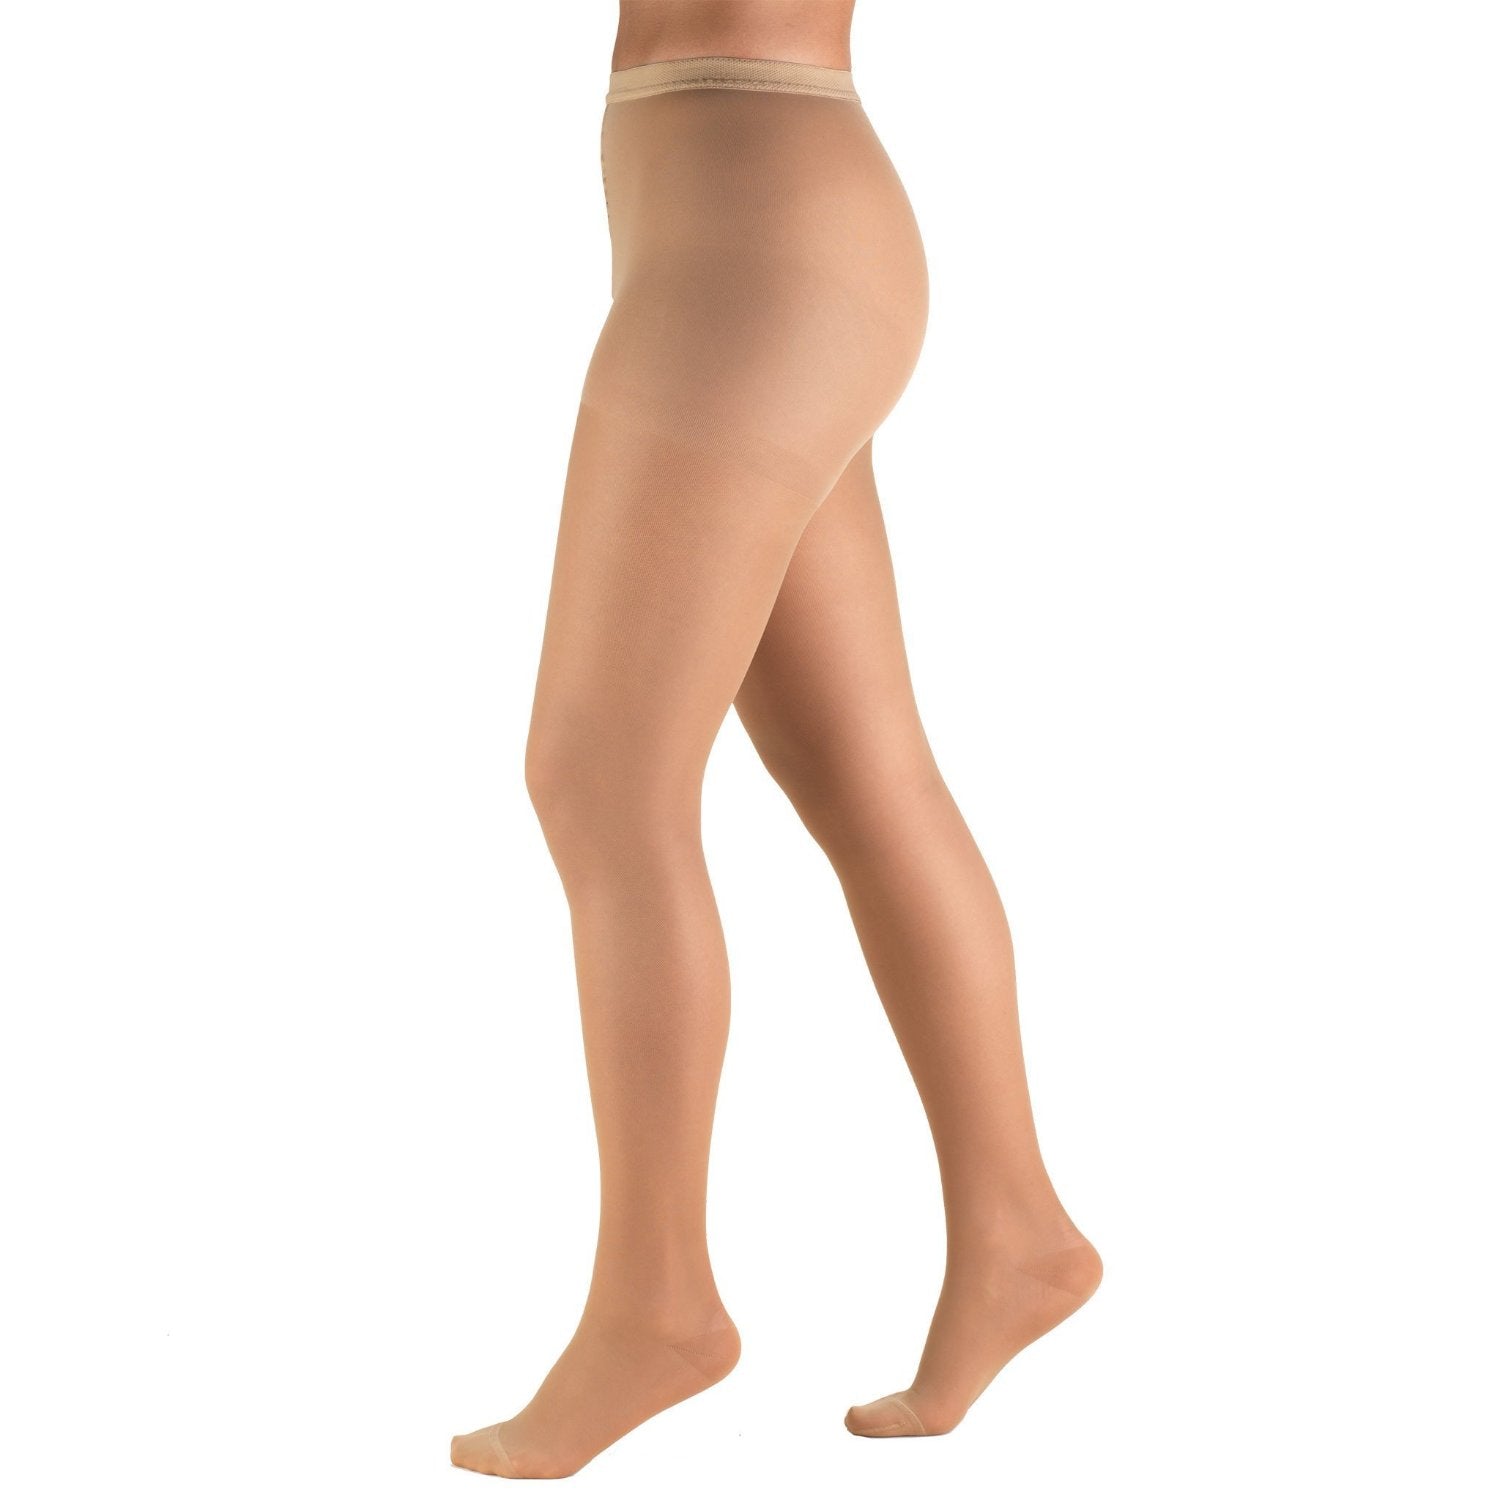 PULRITUDO Women's Sheer Tights Pantyhose Stockings for Women Panty